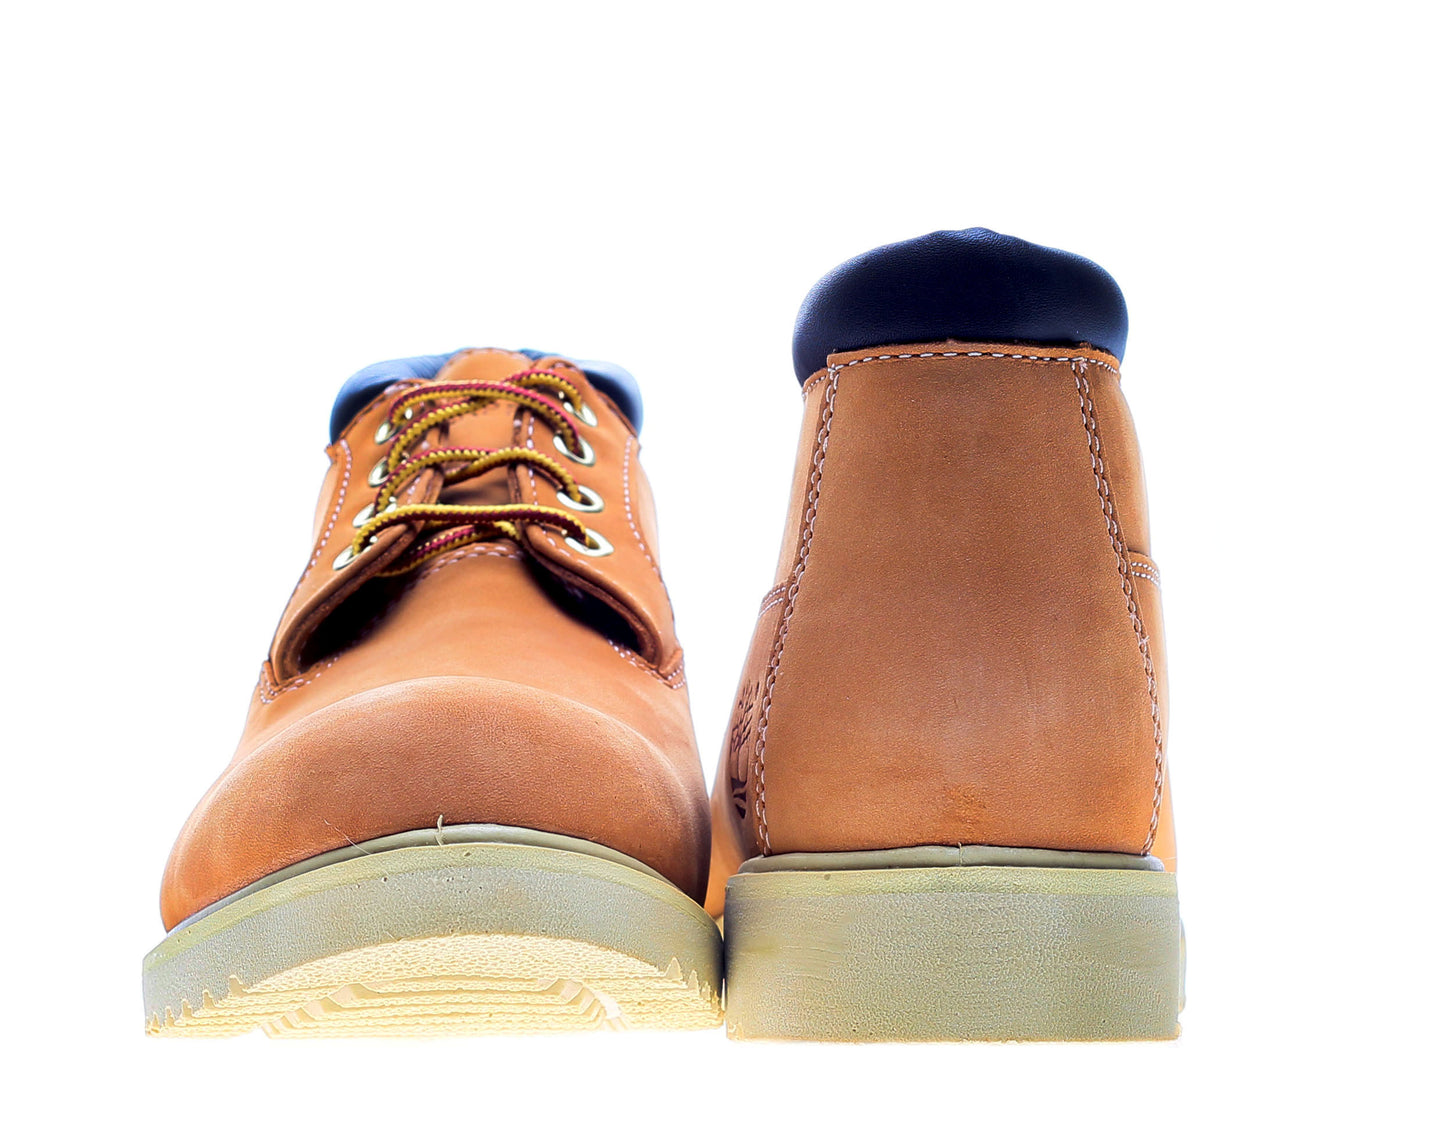 Timberland Waterproof Chukka Men's Boots